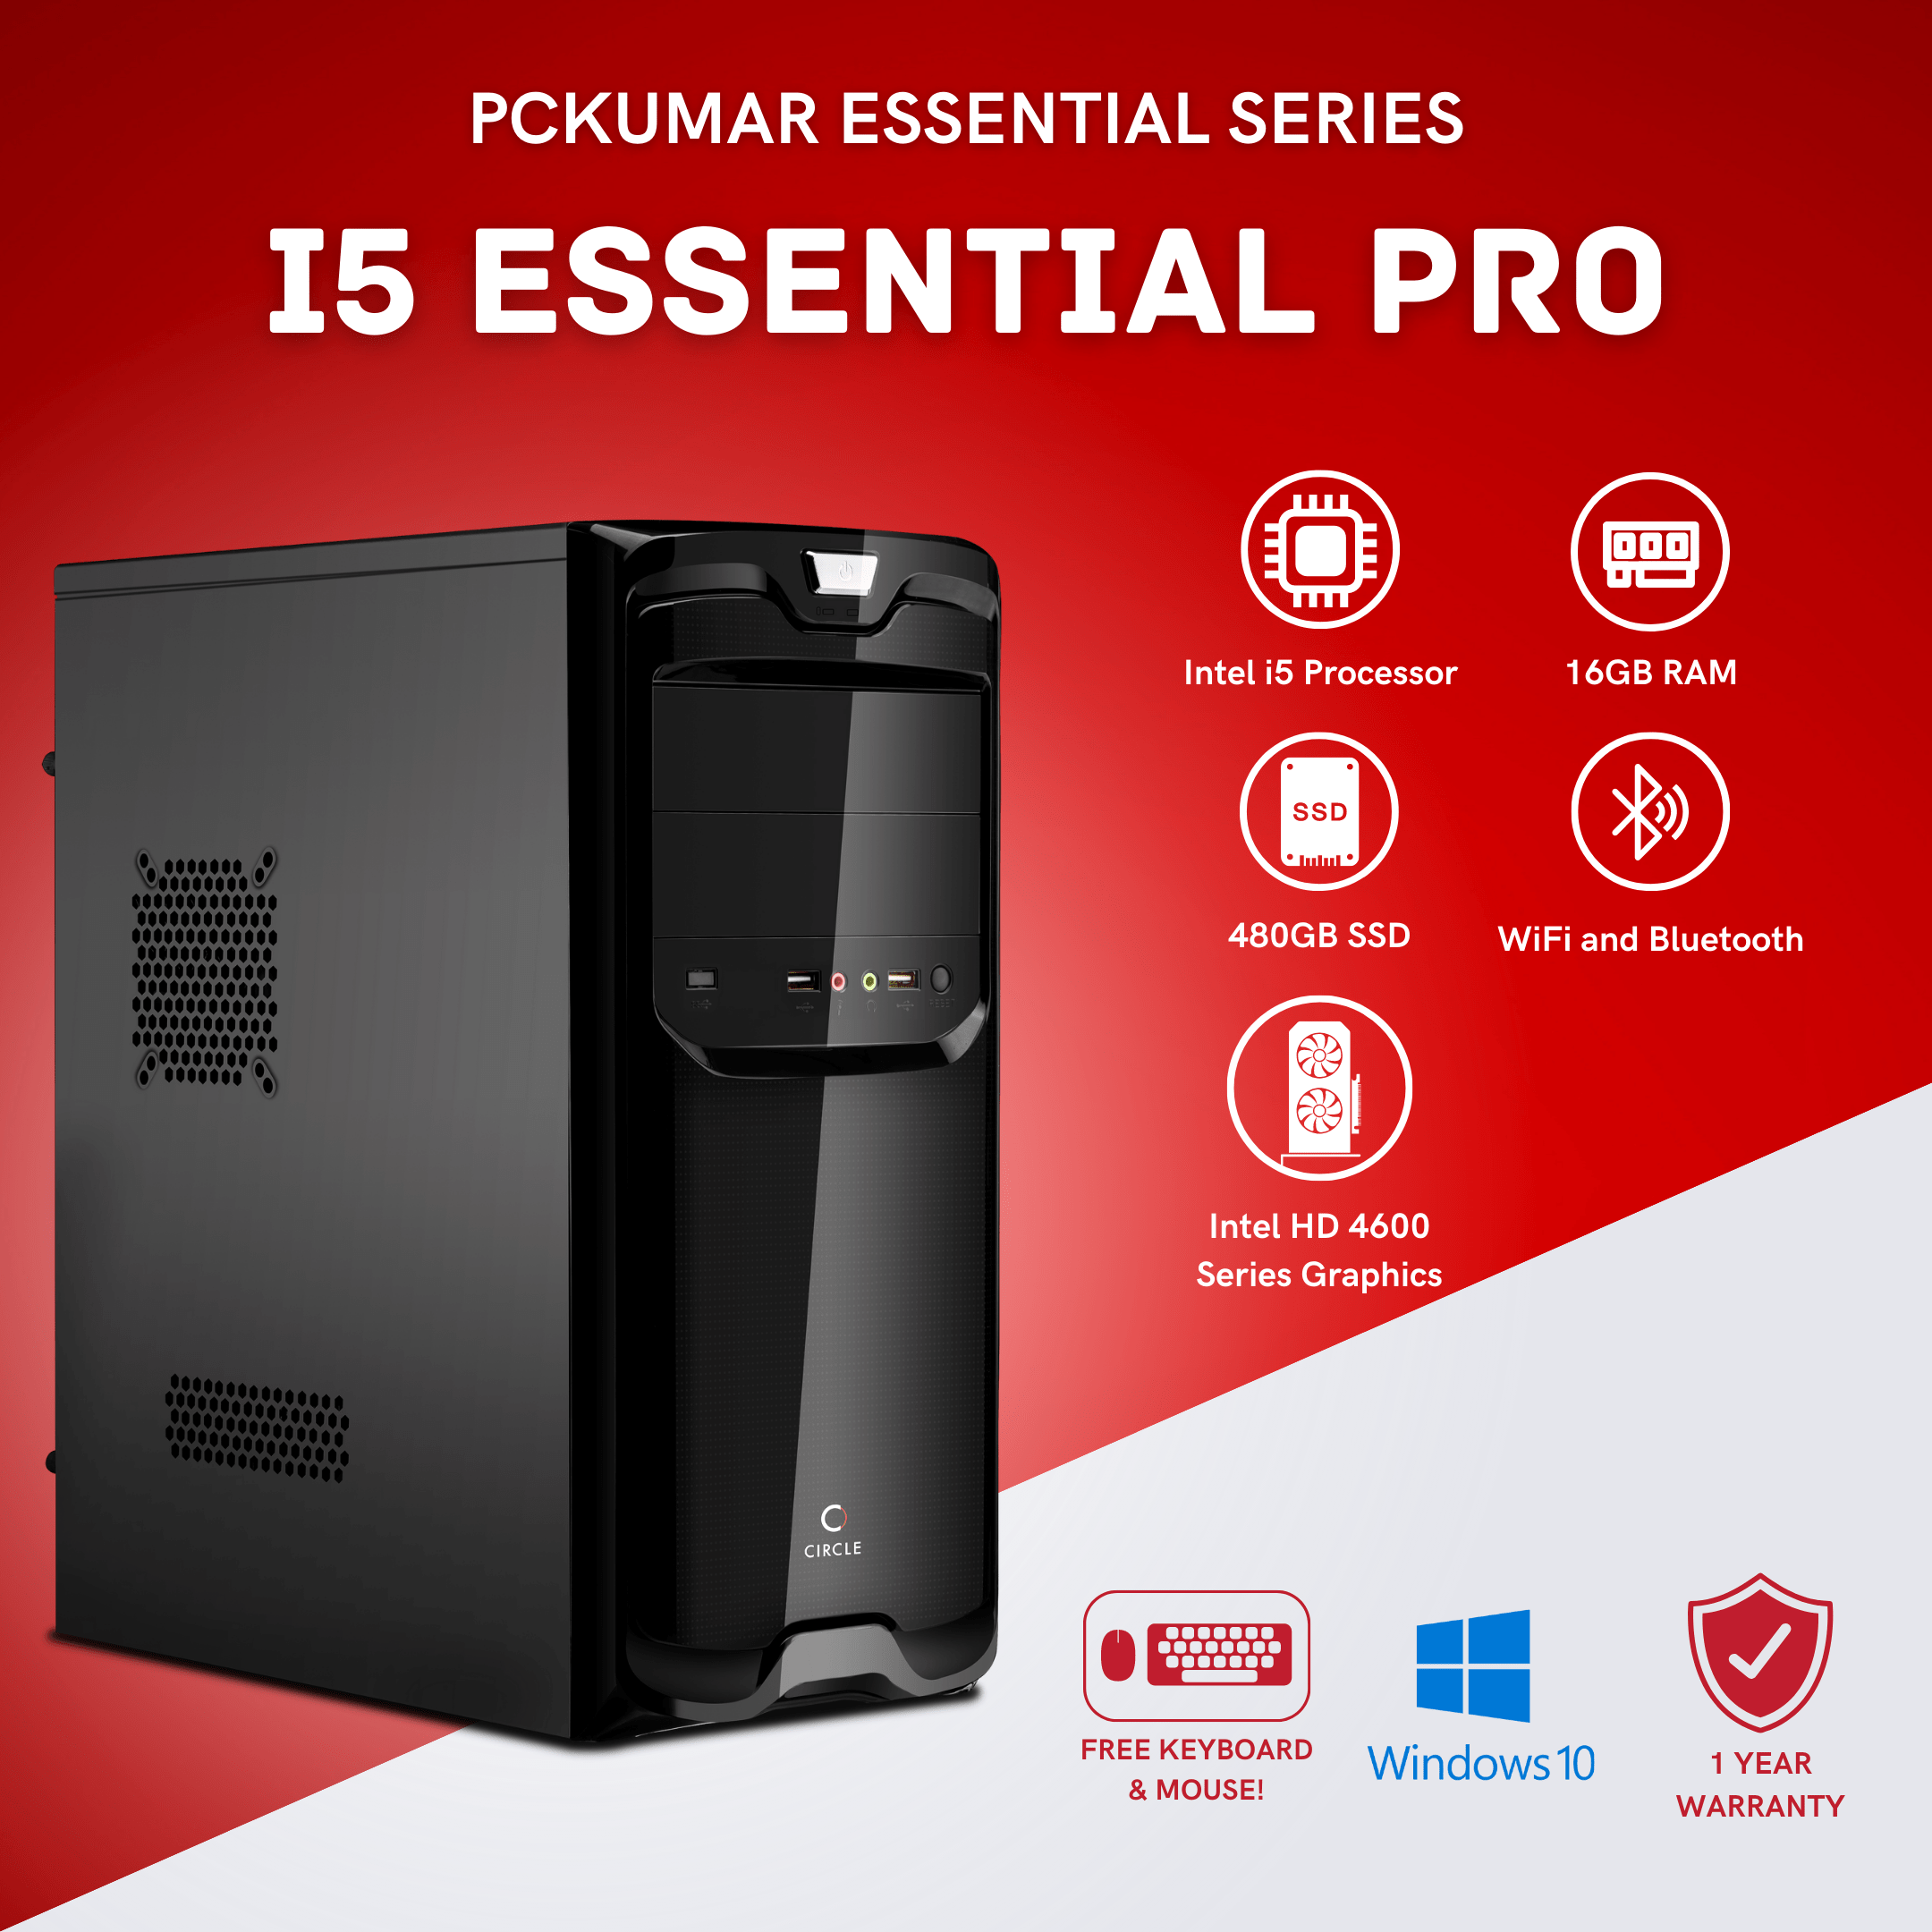 Pckumar Essential Pro Intel i5 Basic PC